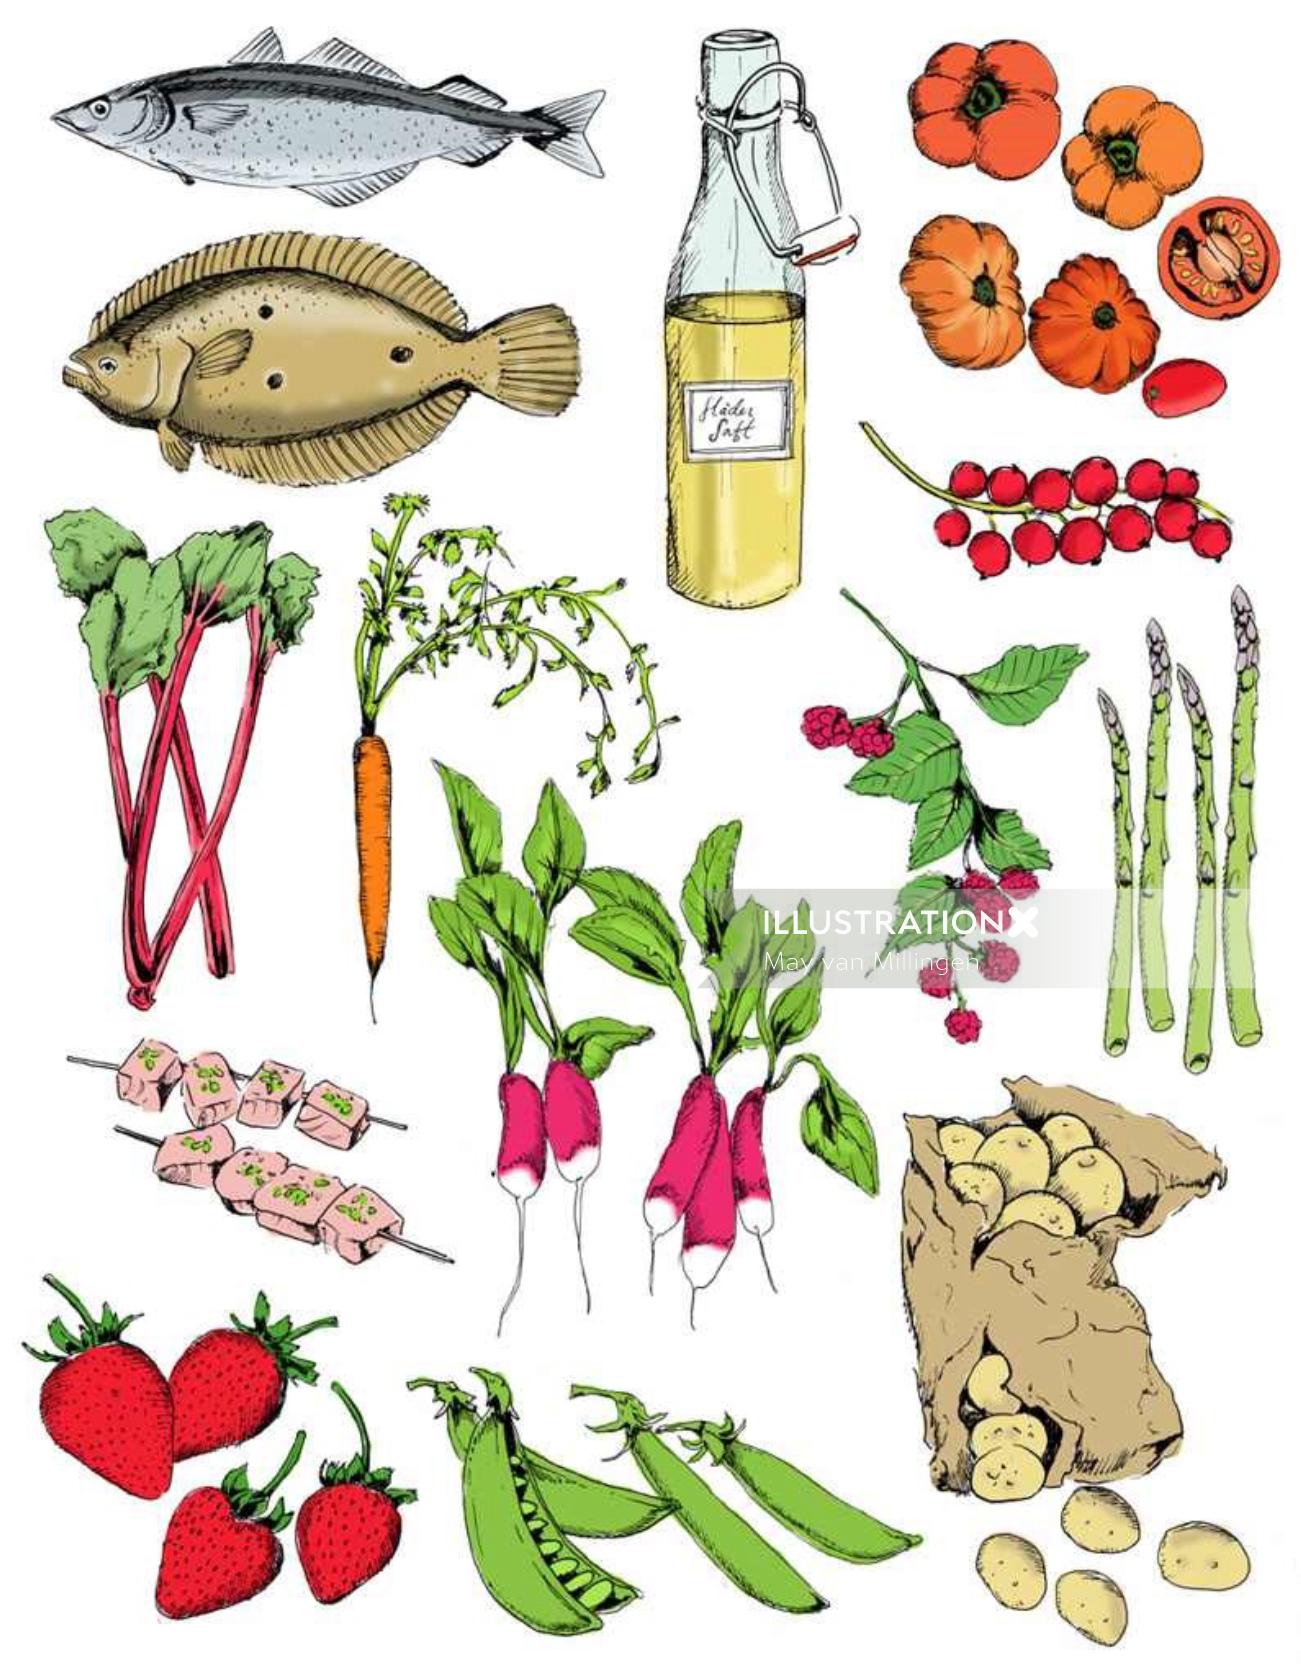 Food illustration by May van Millingen